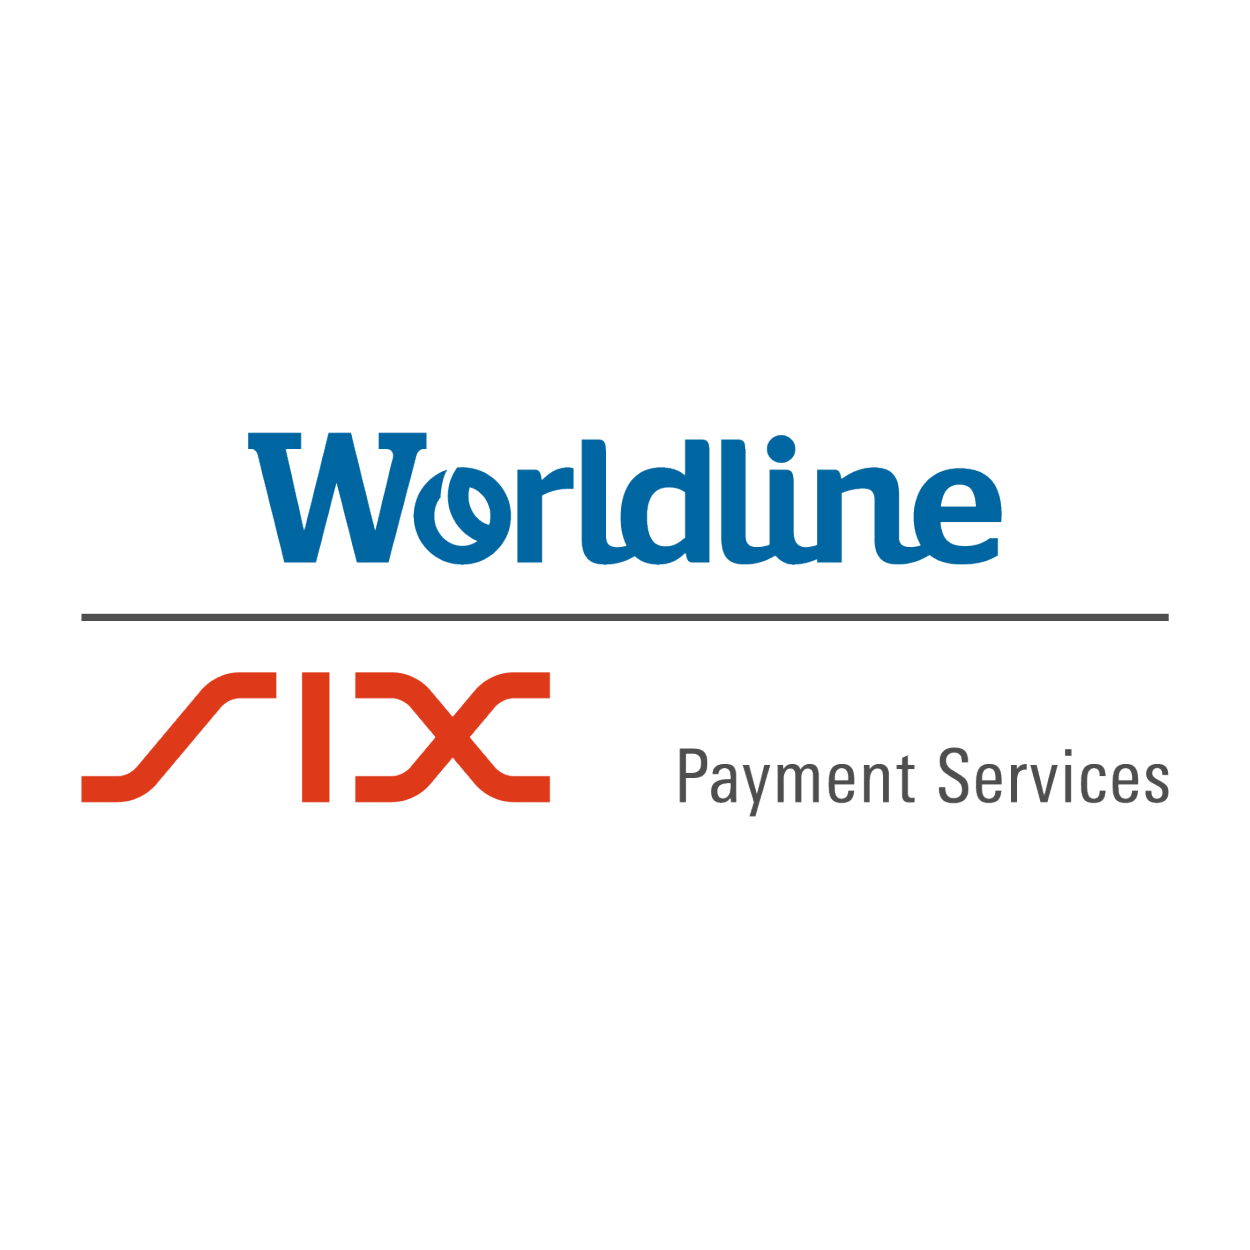 SIX Payment Services